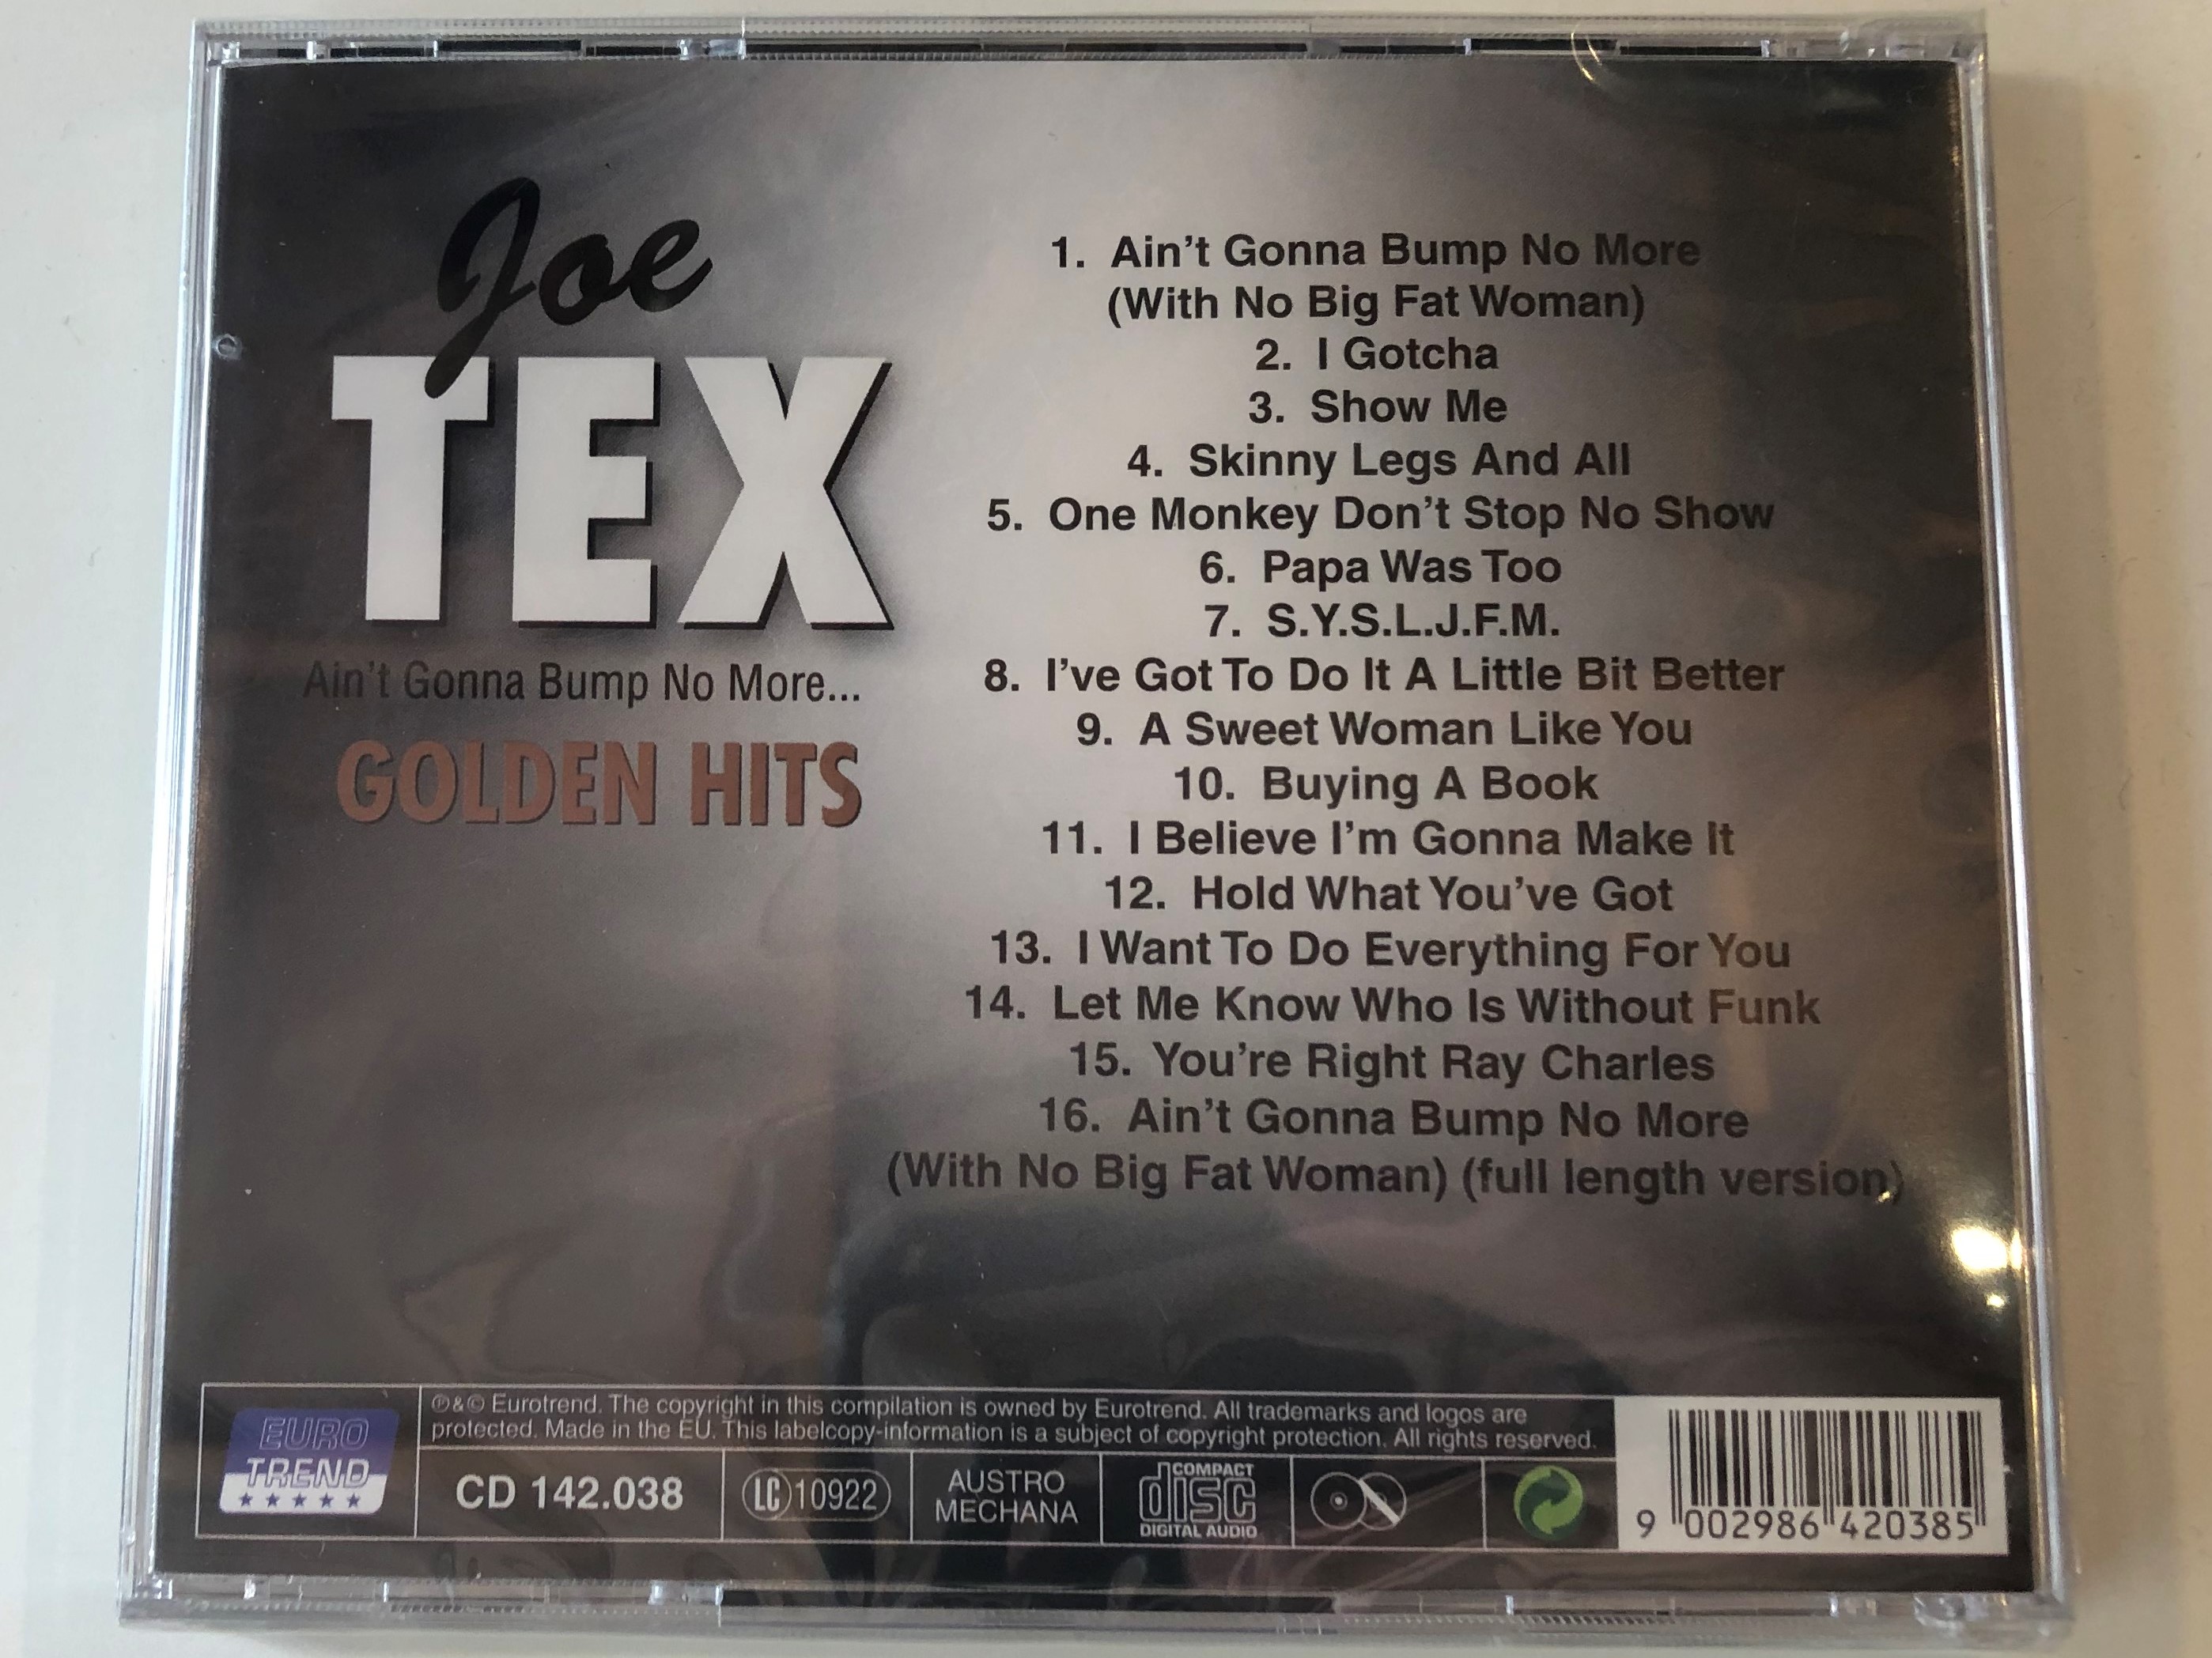 joe-tex-ain-t-gonna-bump-no-more...-golden-hits-eurotrend-audio-cd-cd-142-2-.jpg